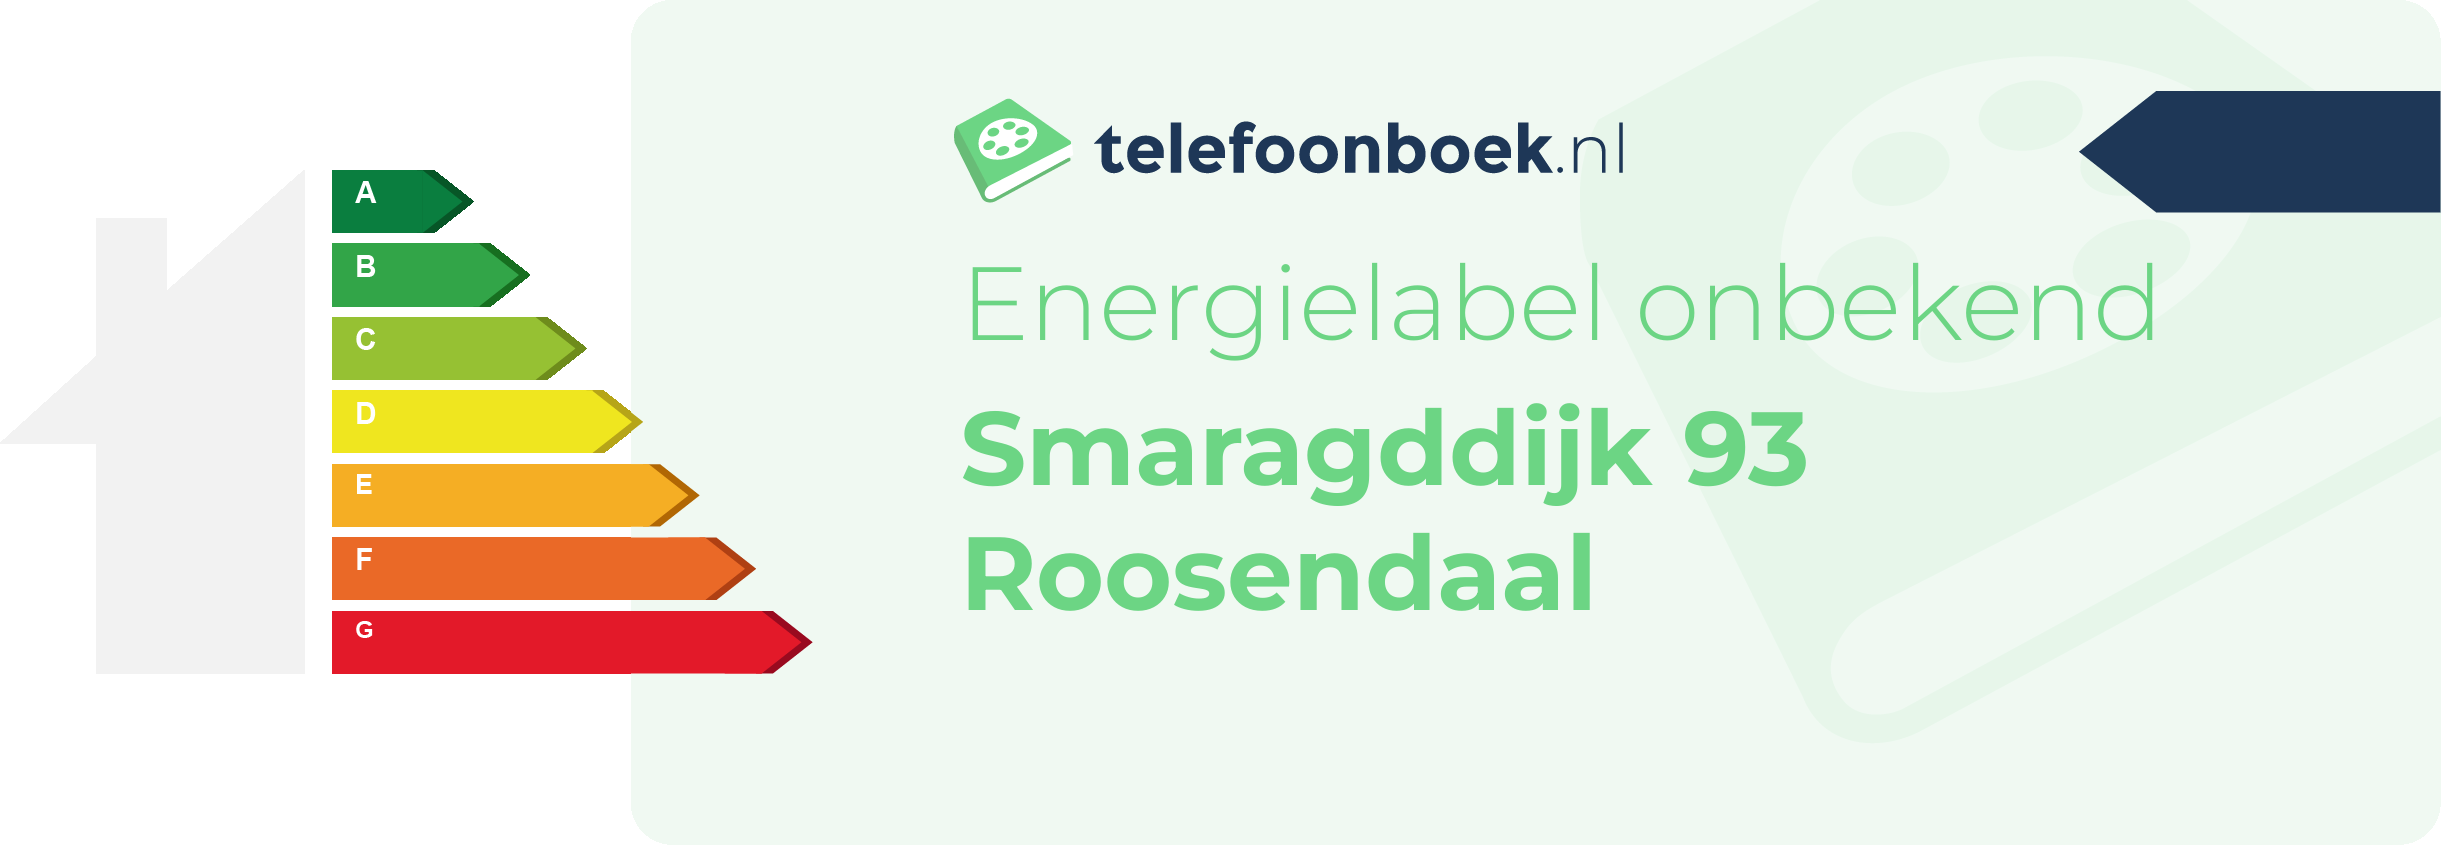 Energielabel Smaragddijk 93 Roosendaal